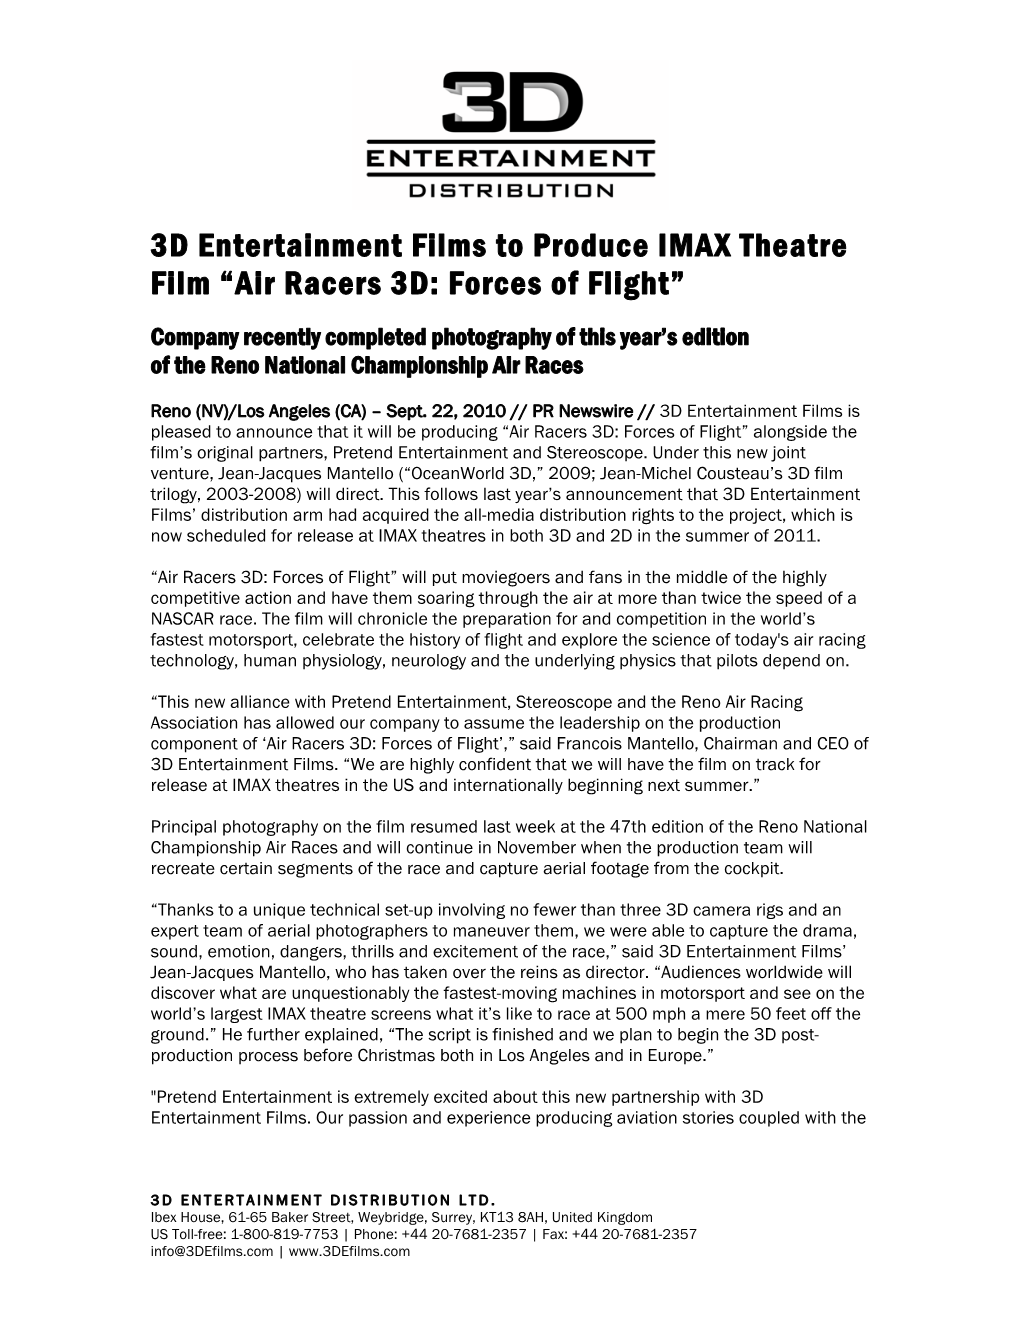 3D Entertainment Films to Produce IMAX Theatre Film “Air Racers 3D: Forces of Flight”